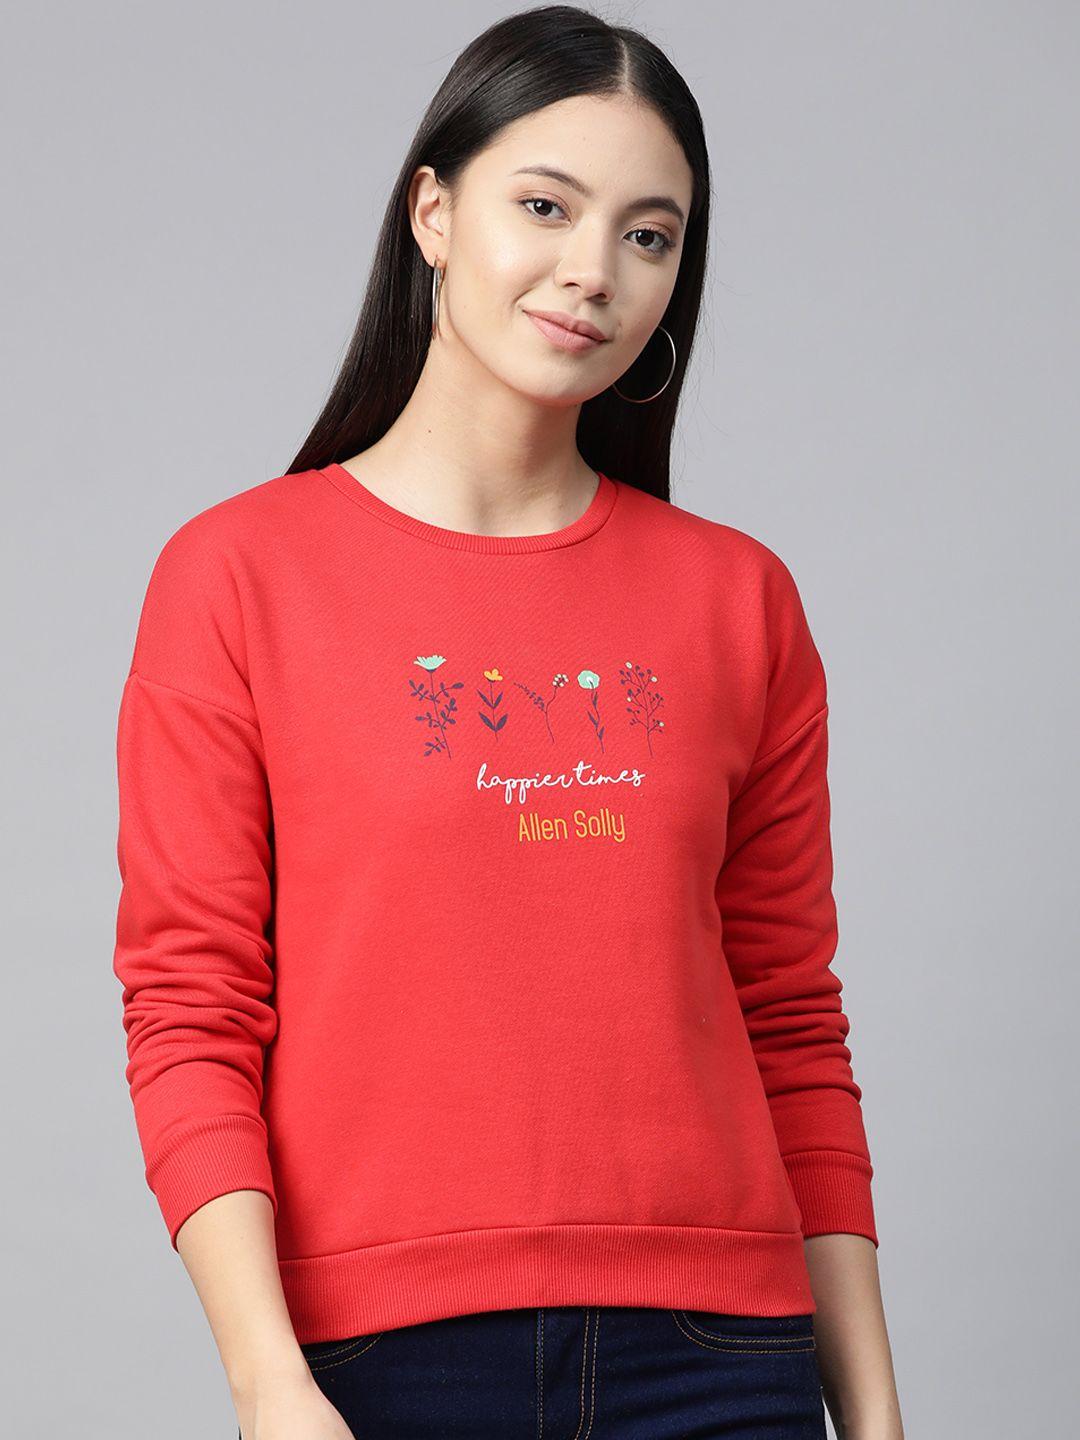 allen solly woman red floral printed sweatshirt